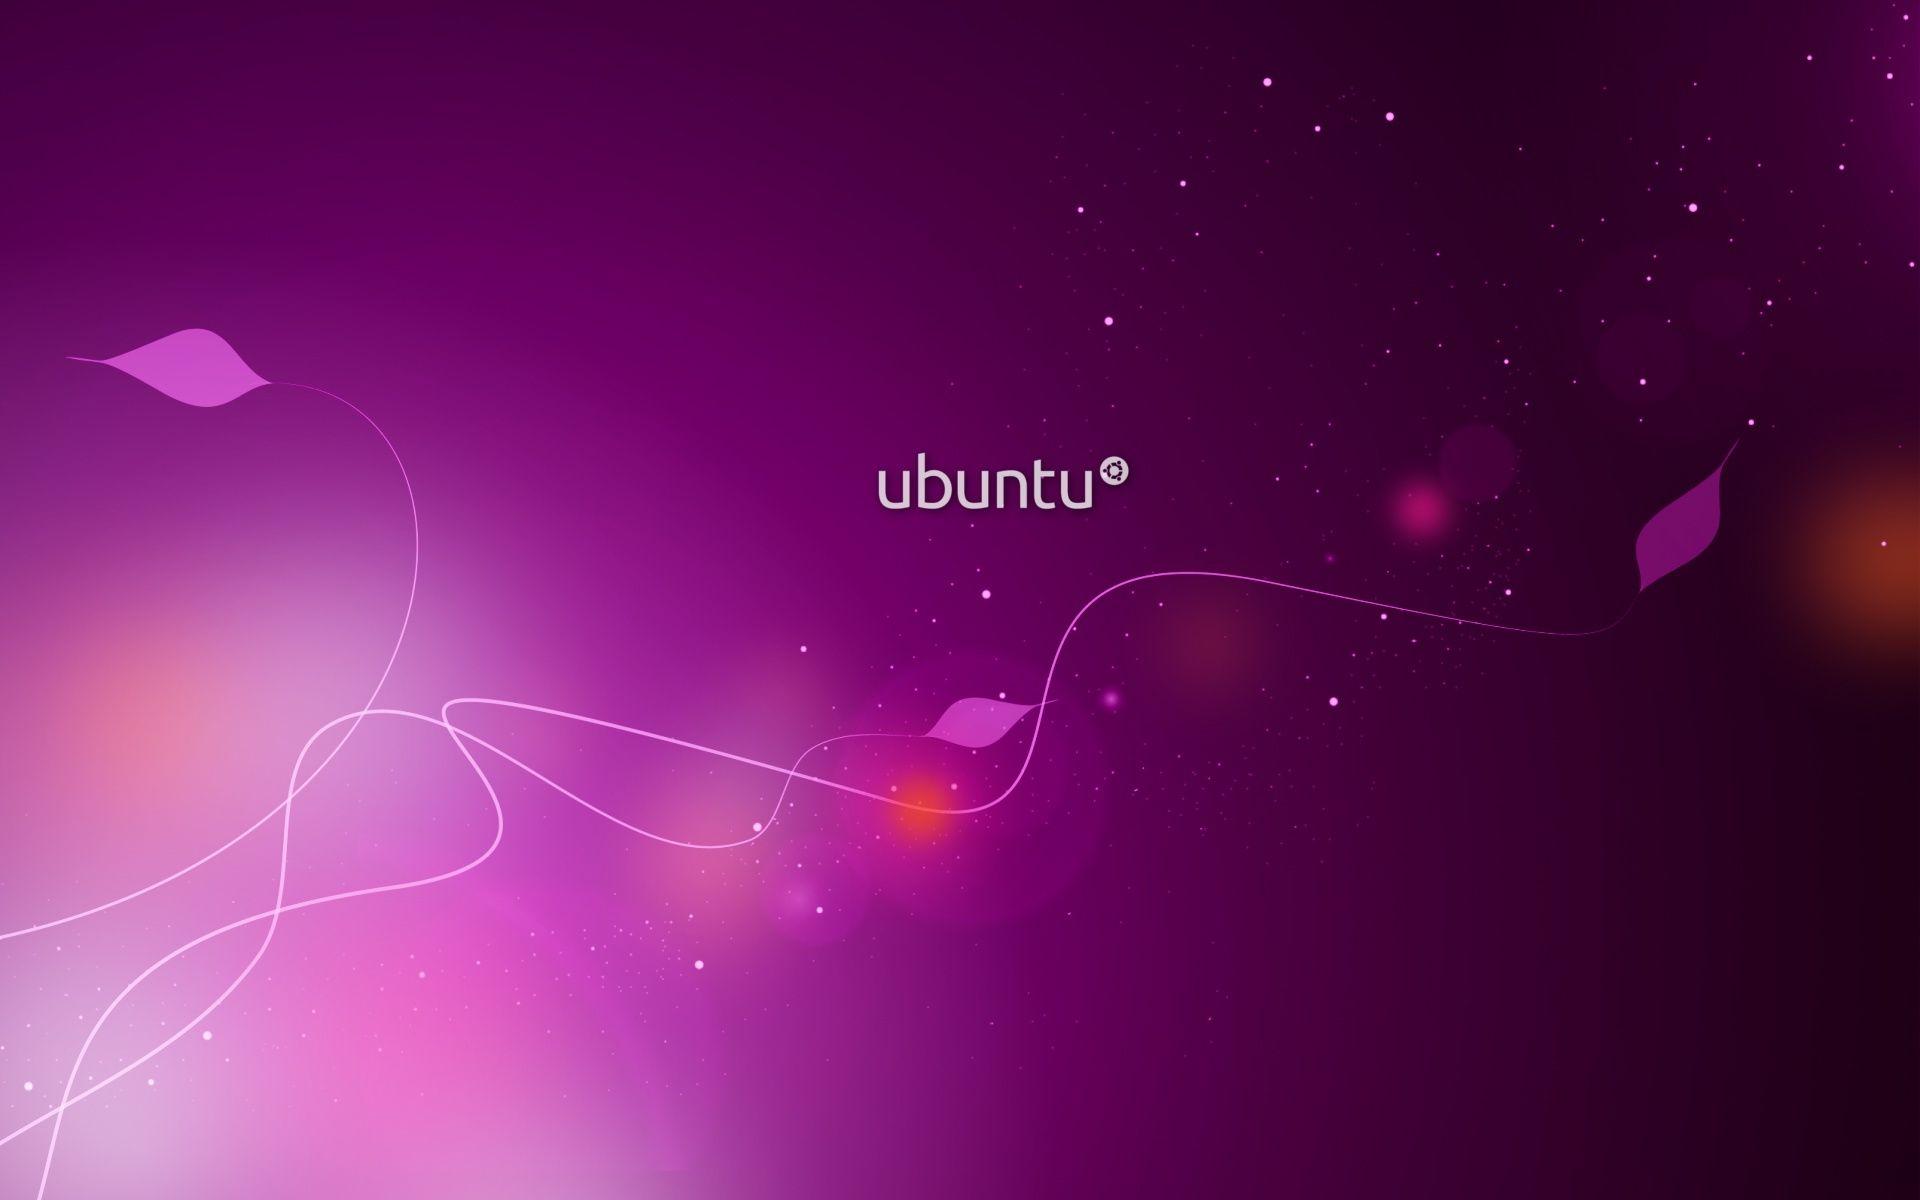 Ubuntu Purple BAckground Wallpaper and